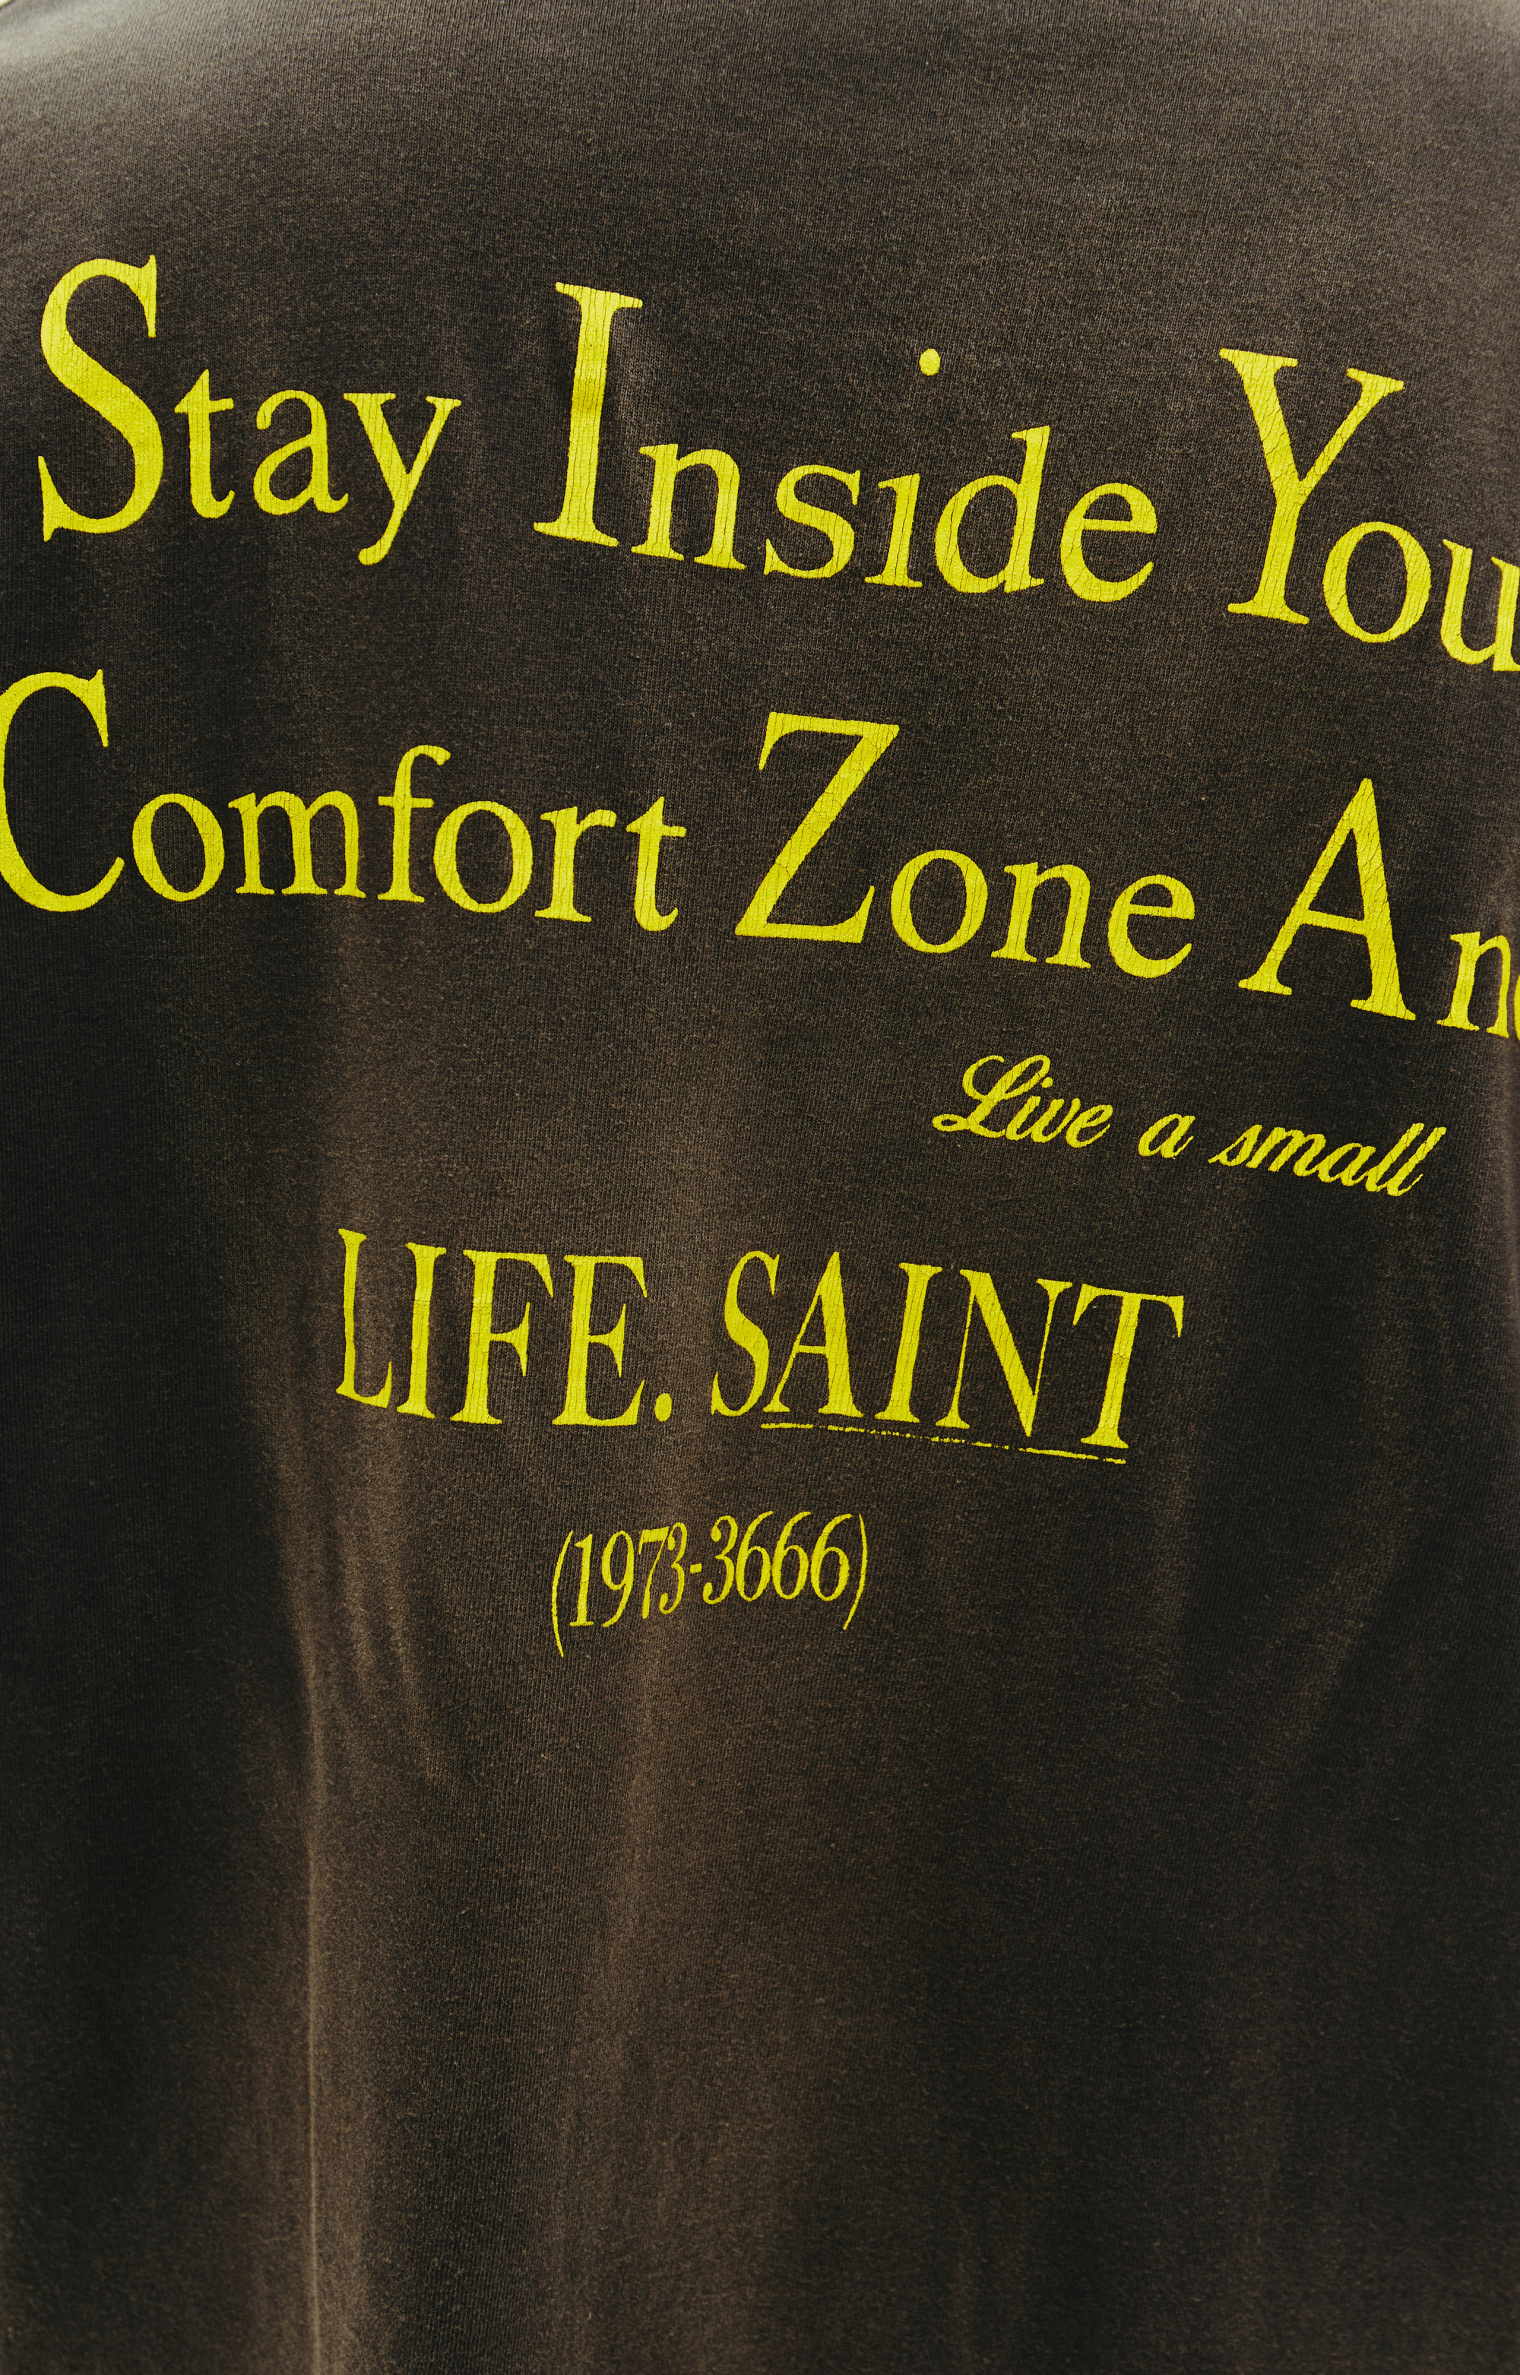 Saint Michael Never be alone printed t-shirt